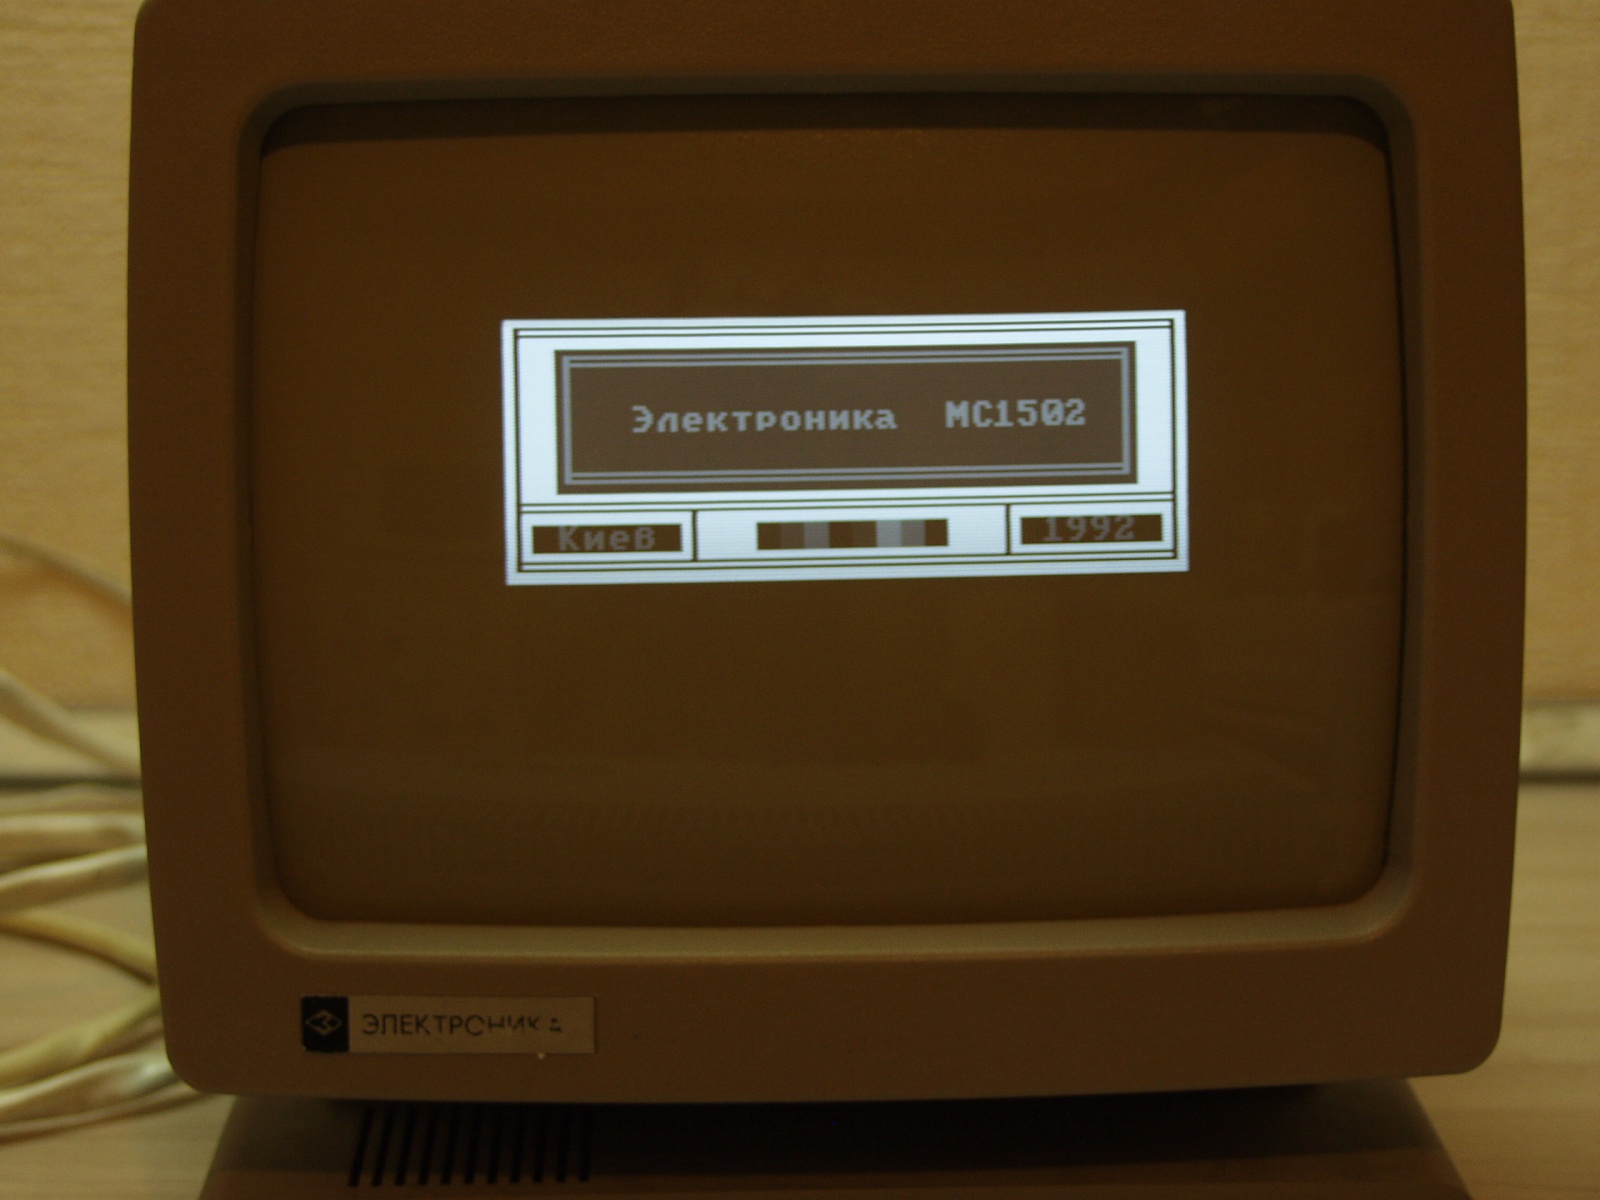 Советская IBM-PC Электроника МС-1502 - 15